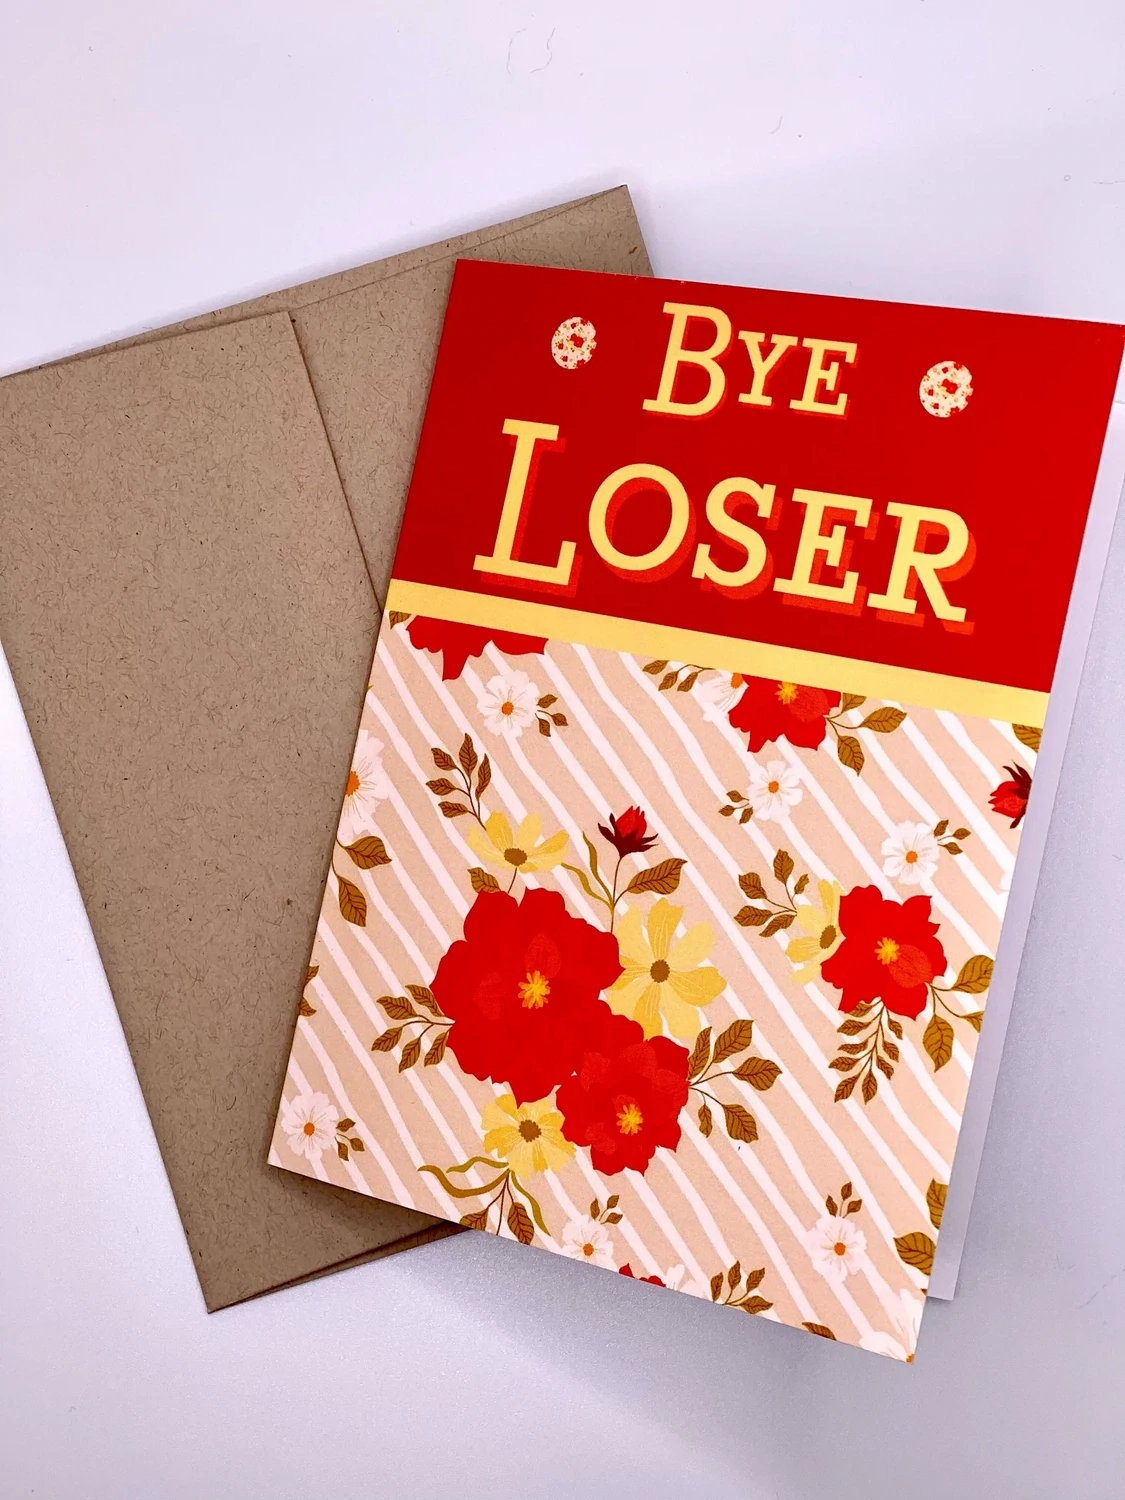 Bye Loser Card